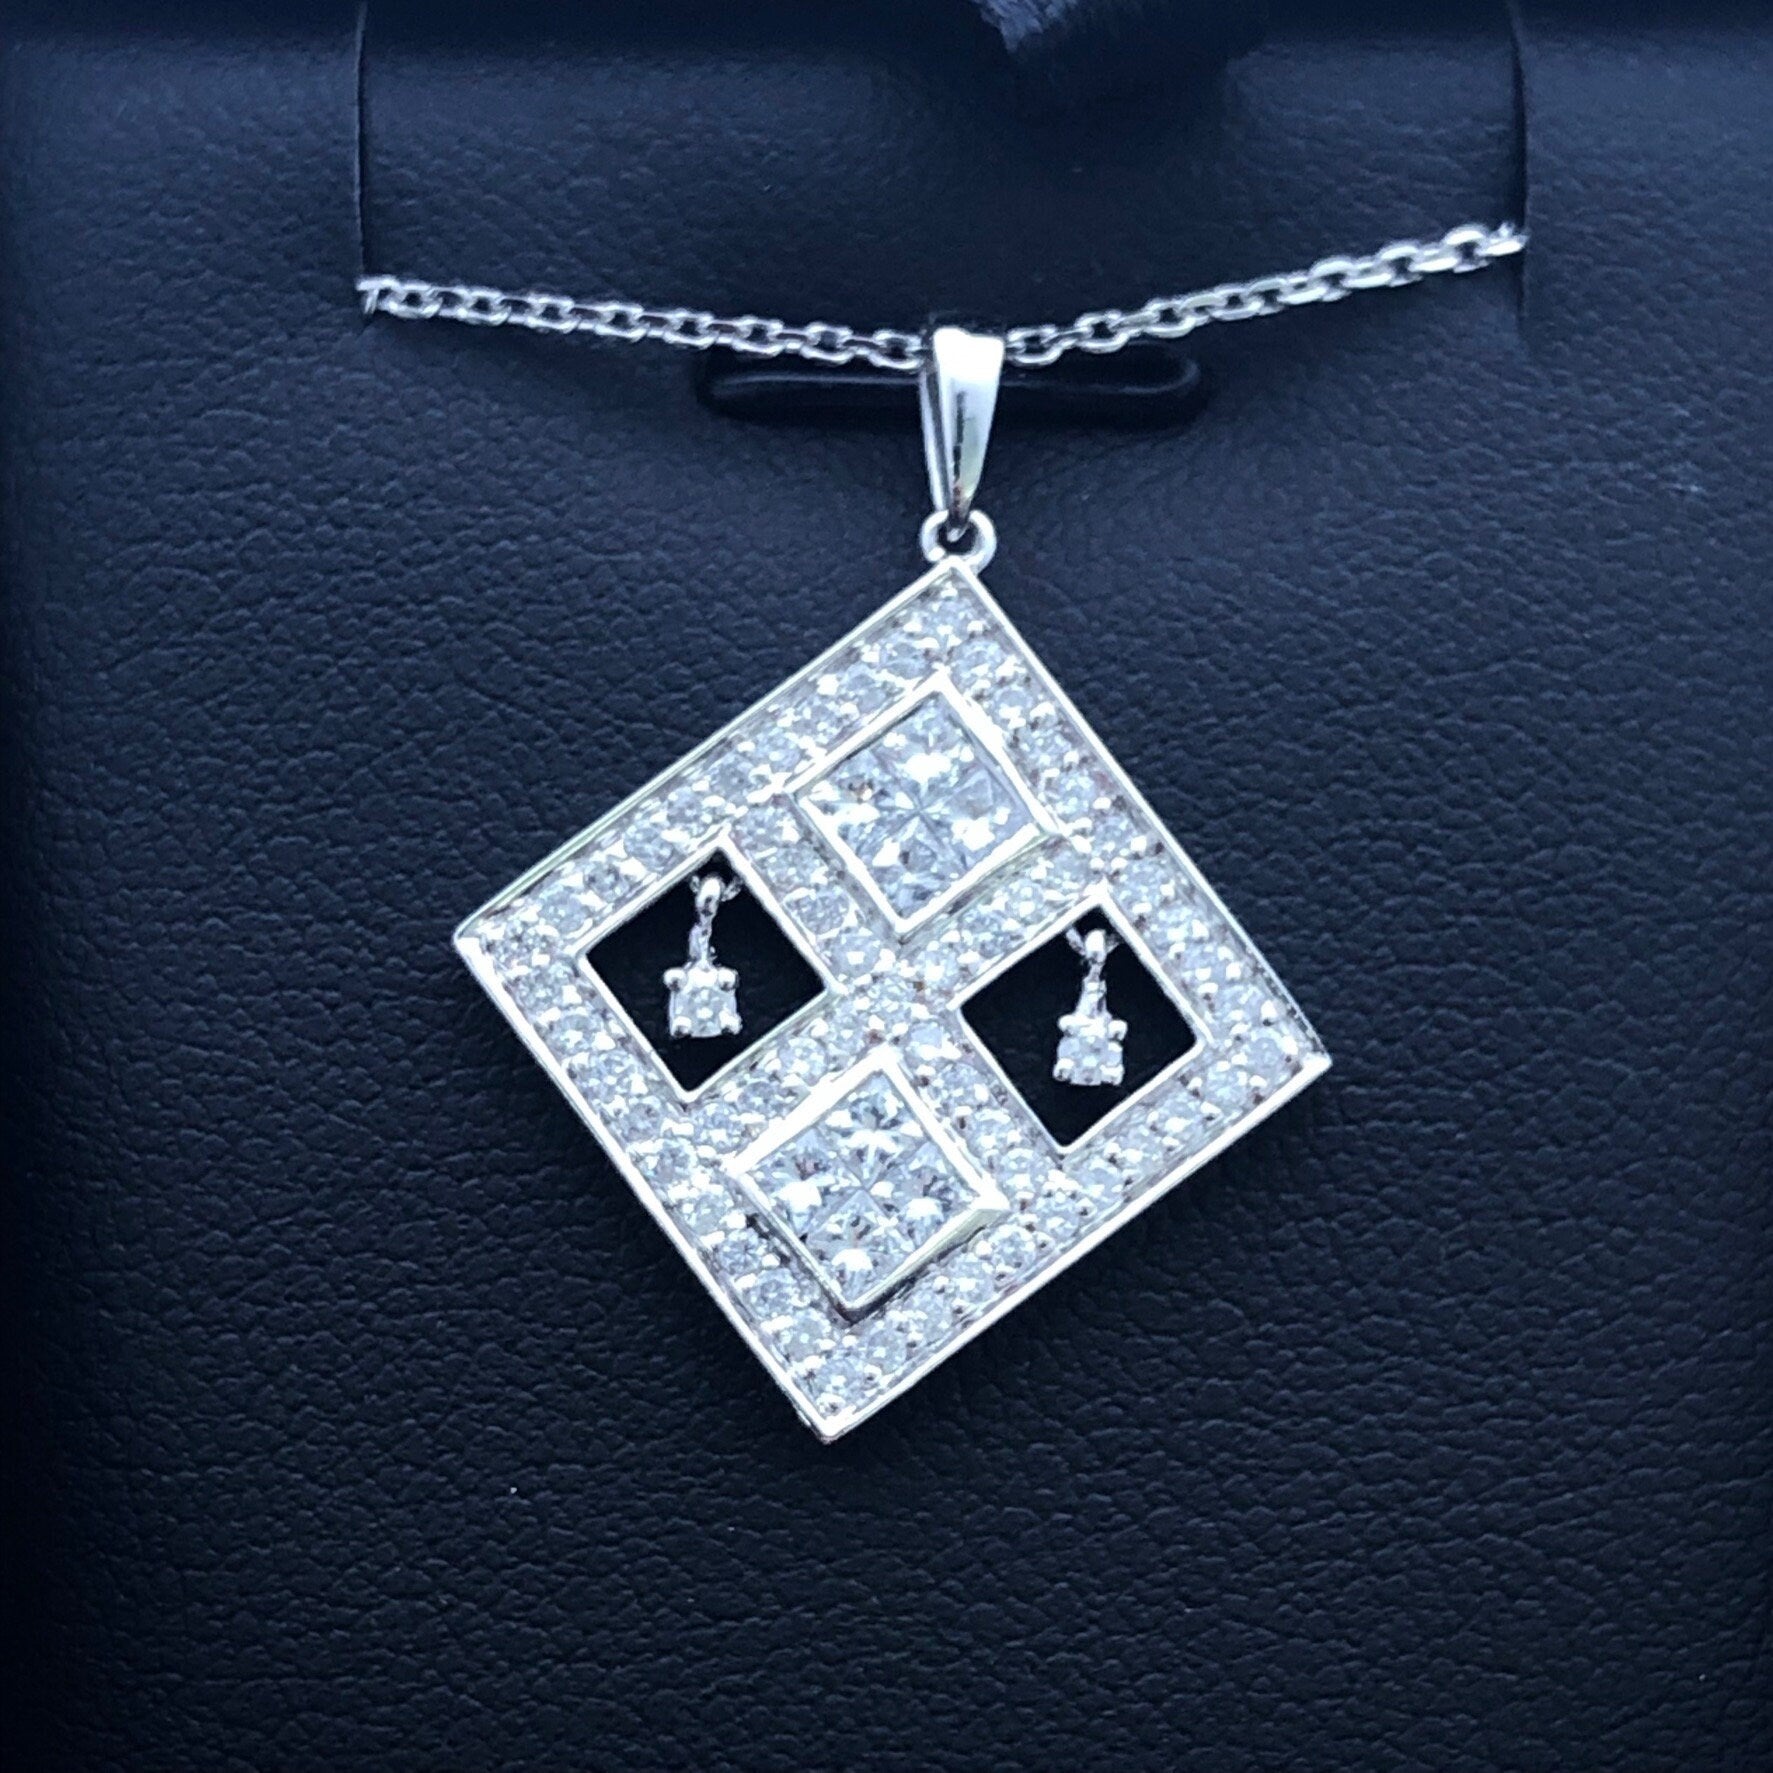 LIV 14k White Gold & Diamonds Round Princess Cut Design Large Halo Pendant Necklace